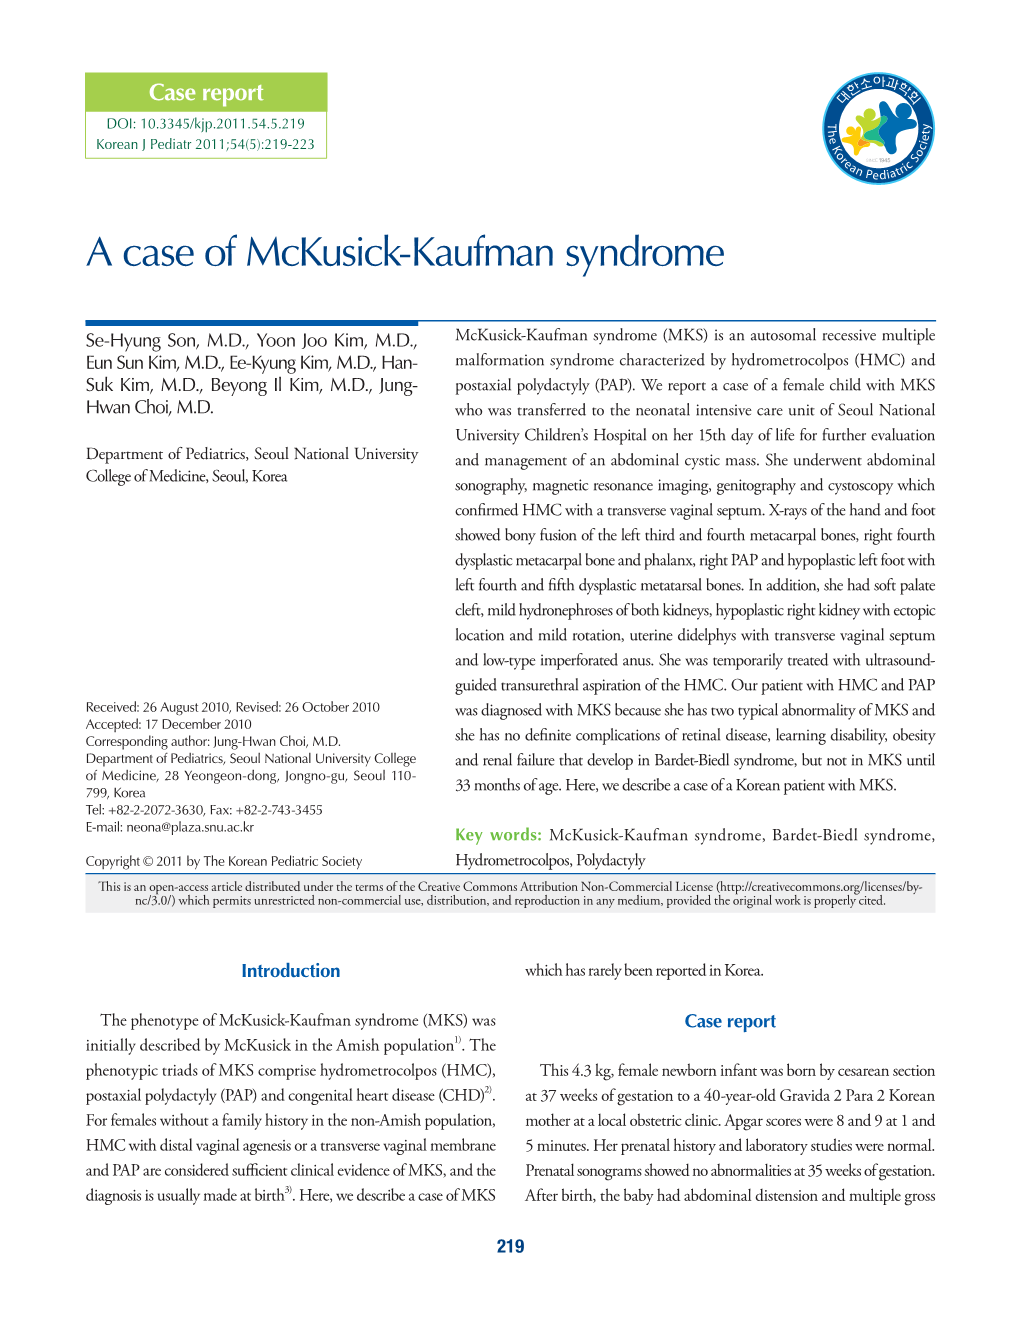 A Case of Mckusick-Kaufman Syndrome